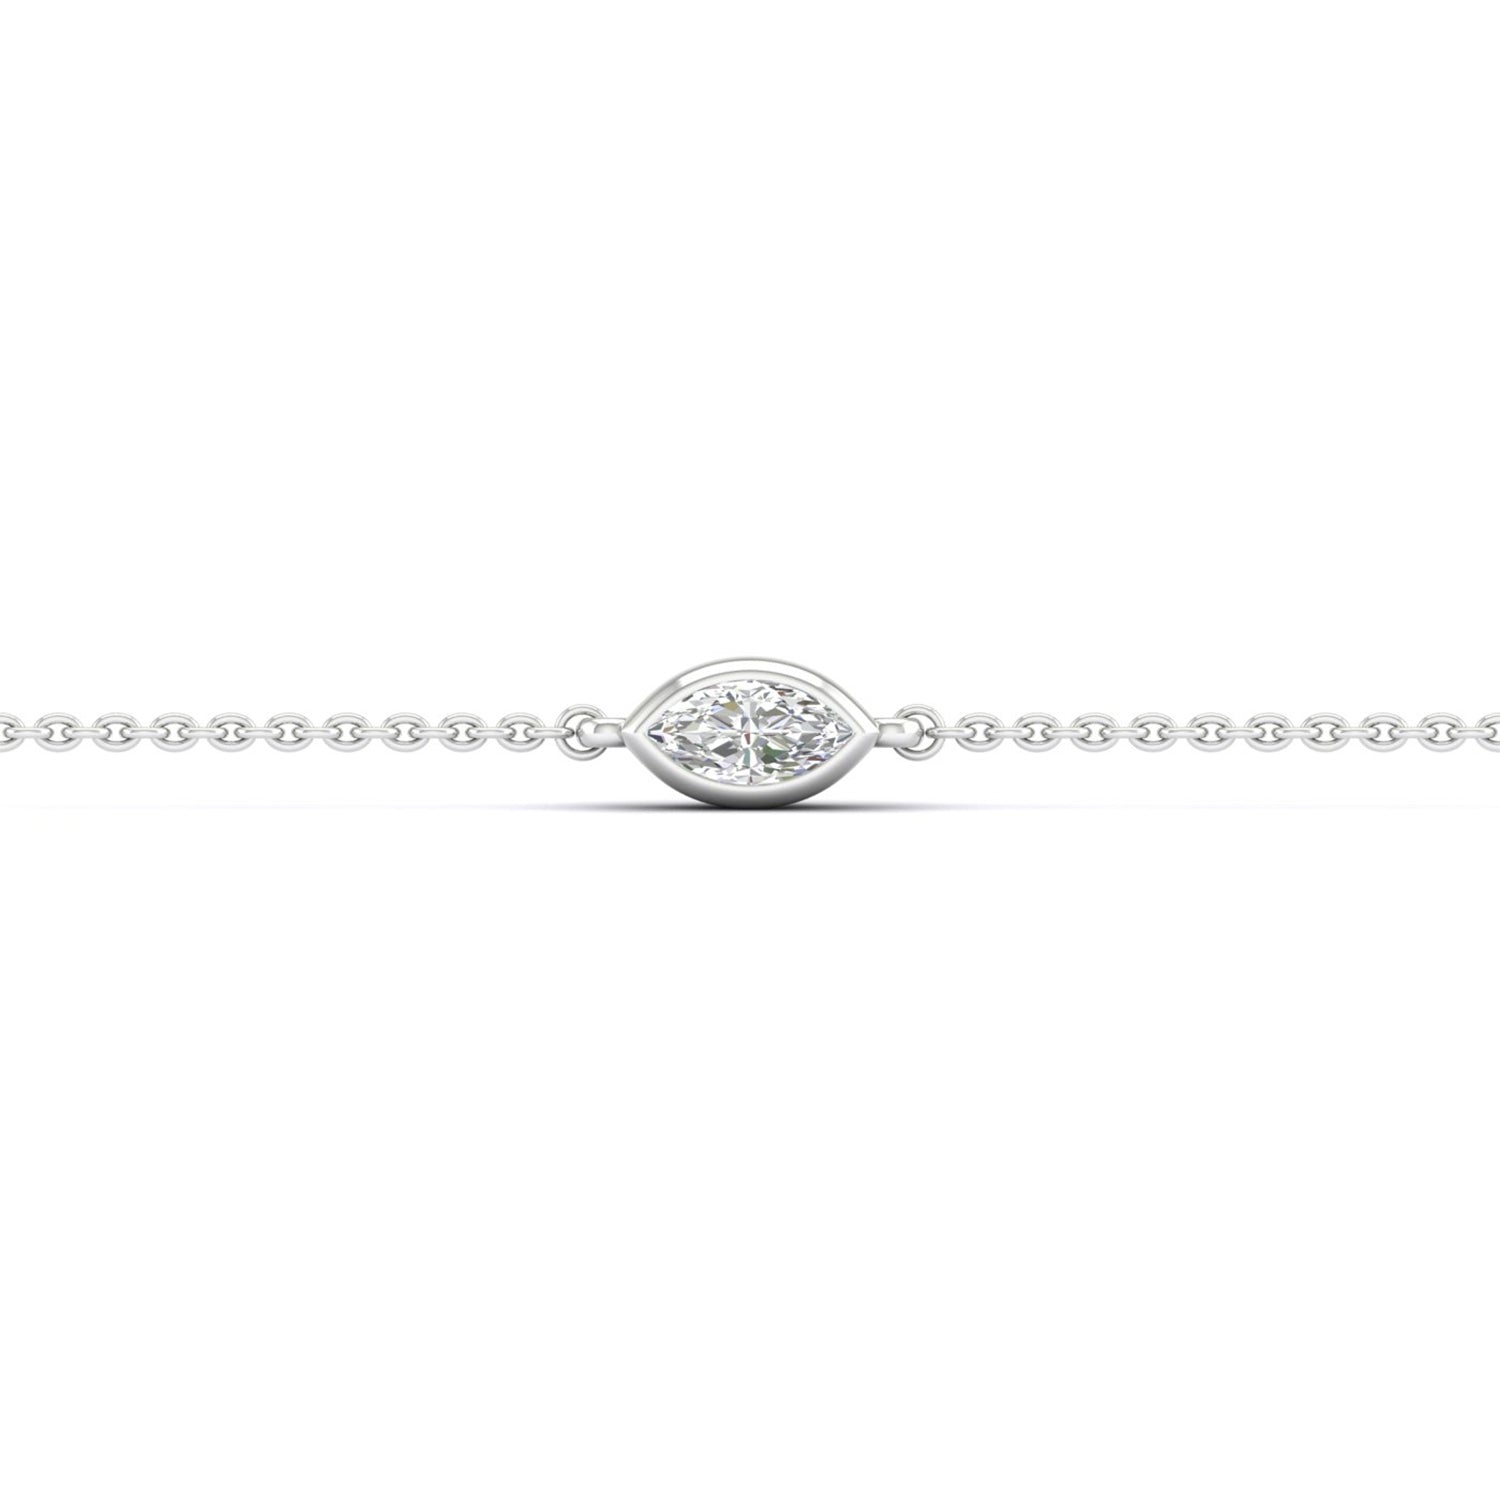 Marquise Diamond Glitter Bracelet_Product angle_1/5 Ct. - 3